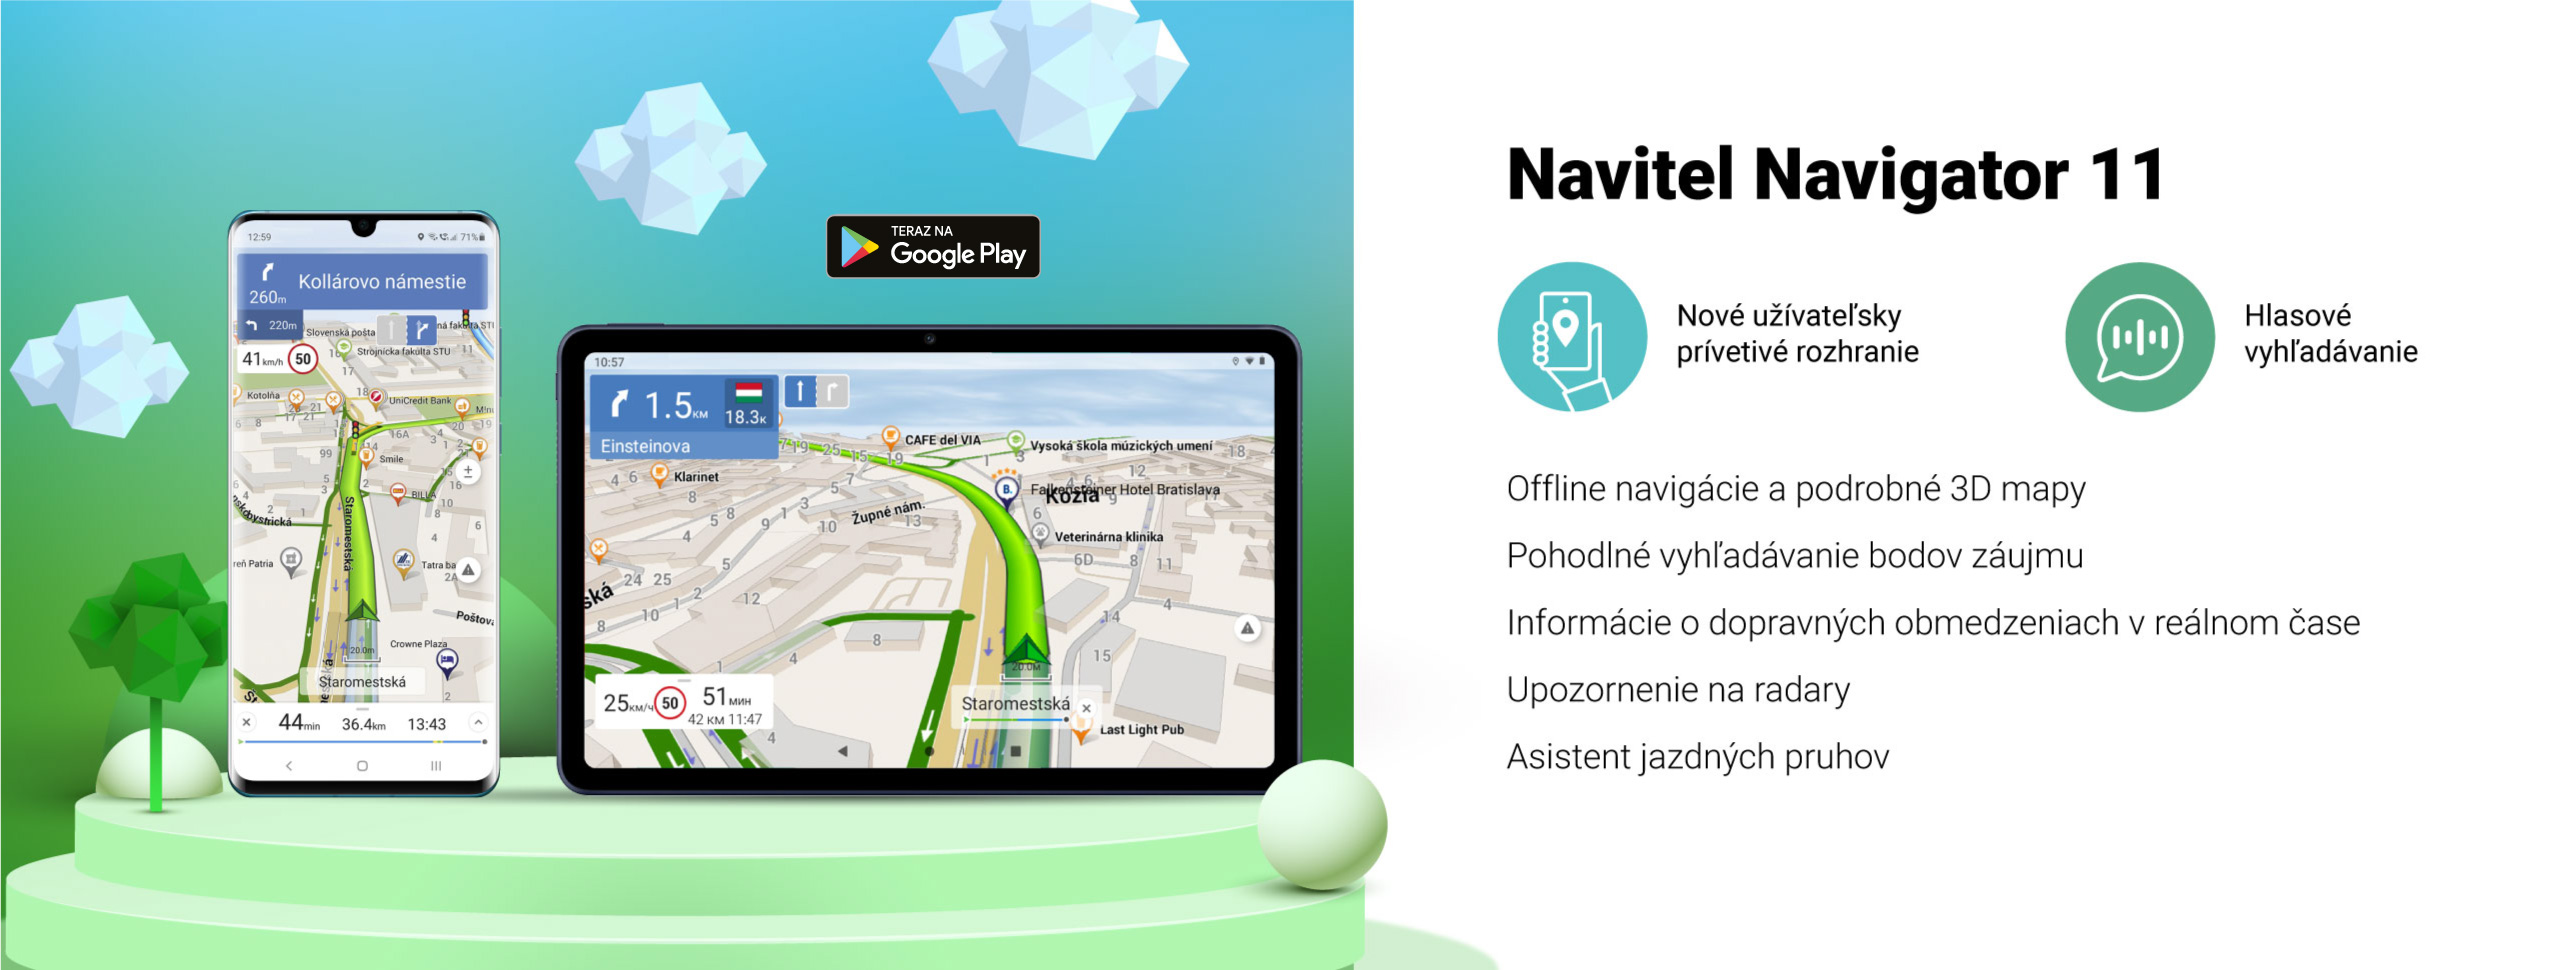 Nový Navitel Navigator 11